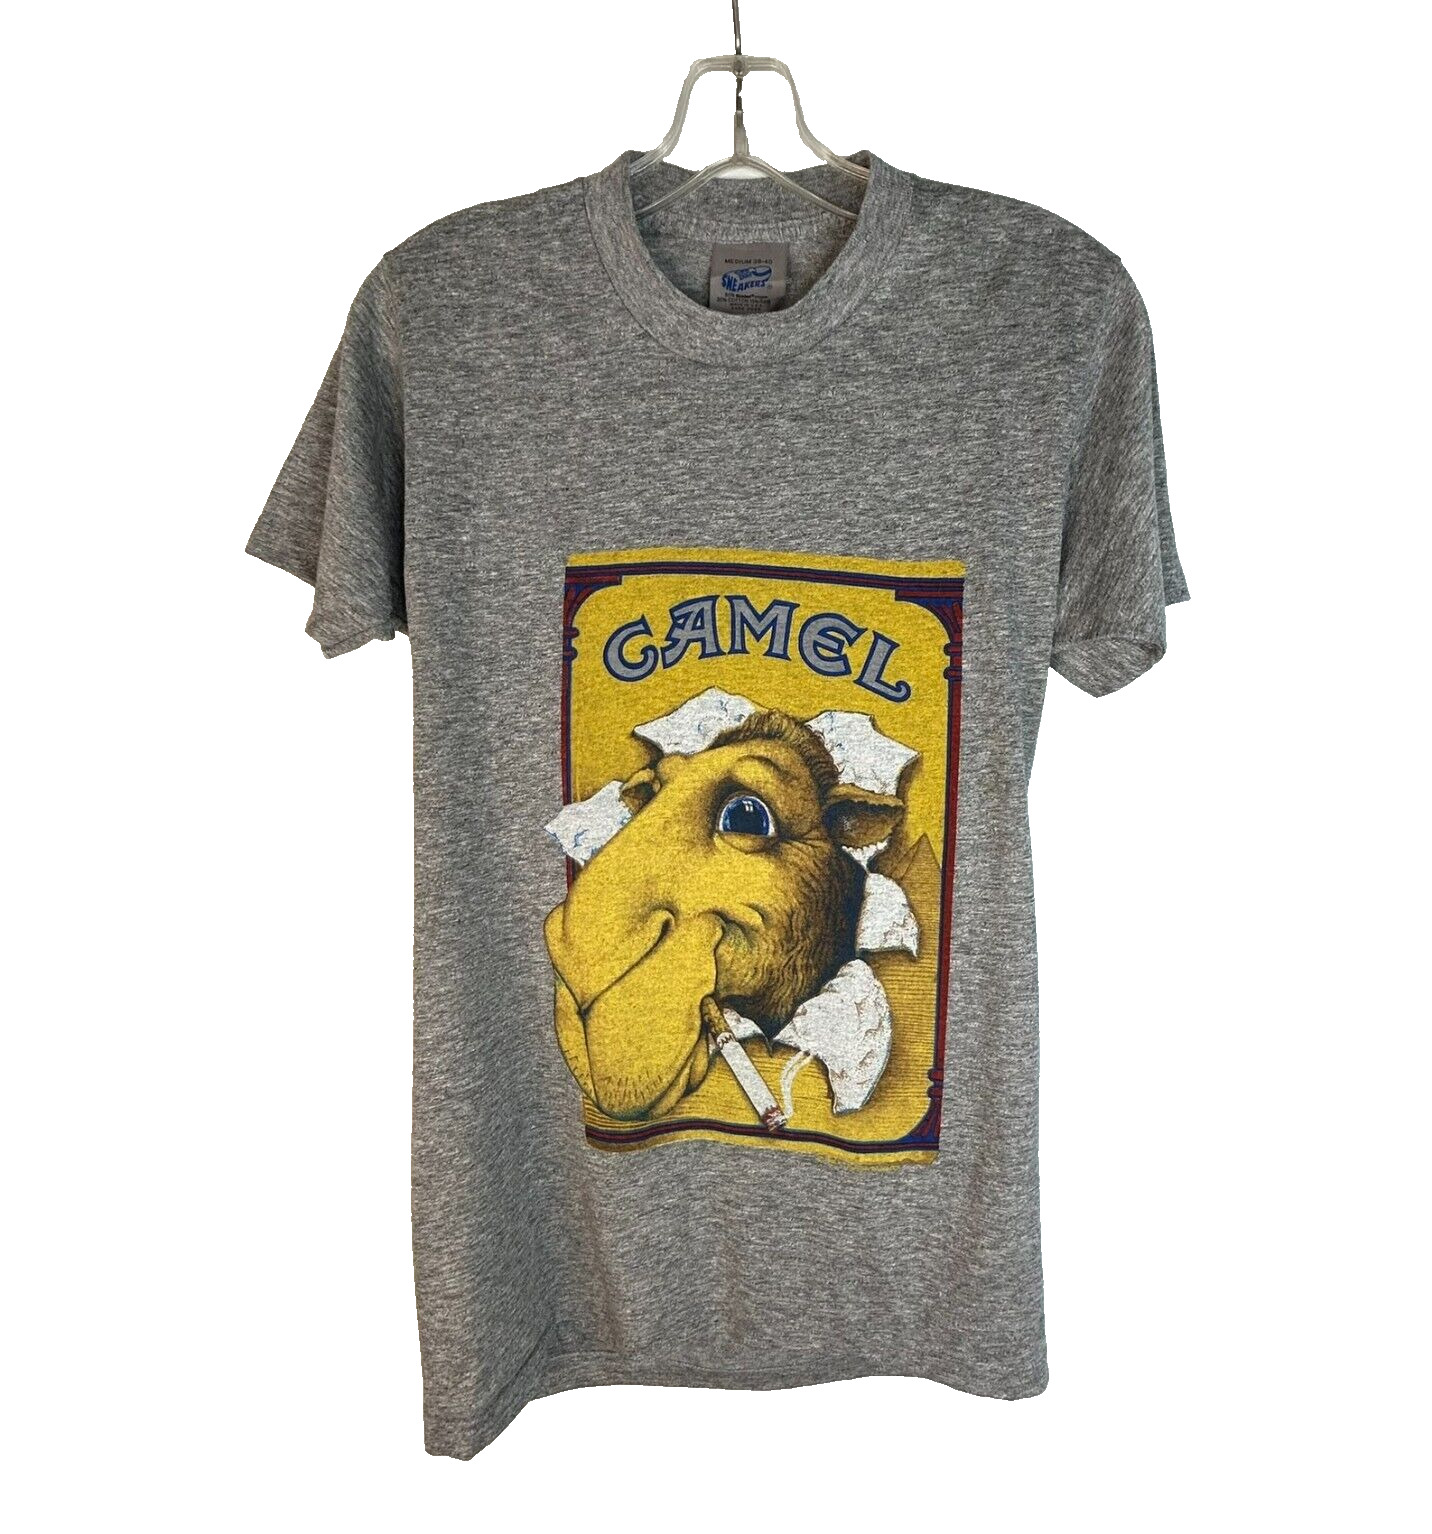 Vintage 80's Joe Camel Cigarettes Heather Gray T-Shirt Retro Classic Size Medium